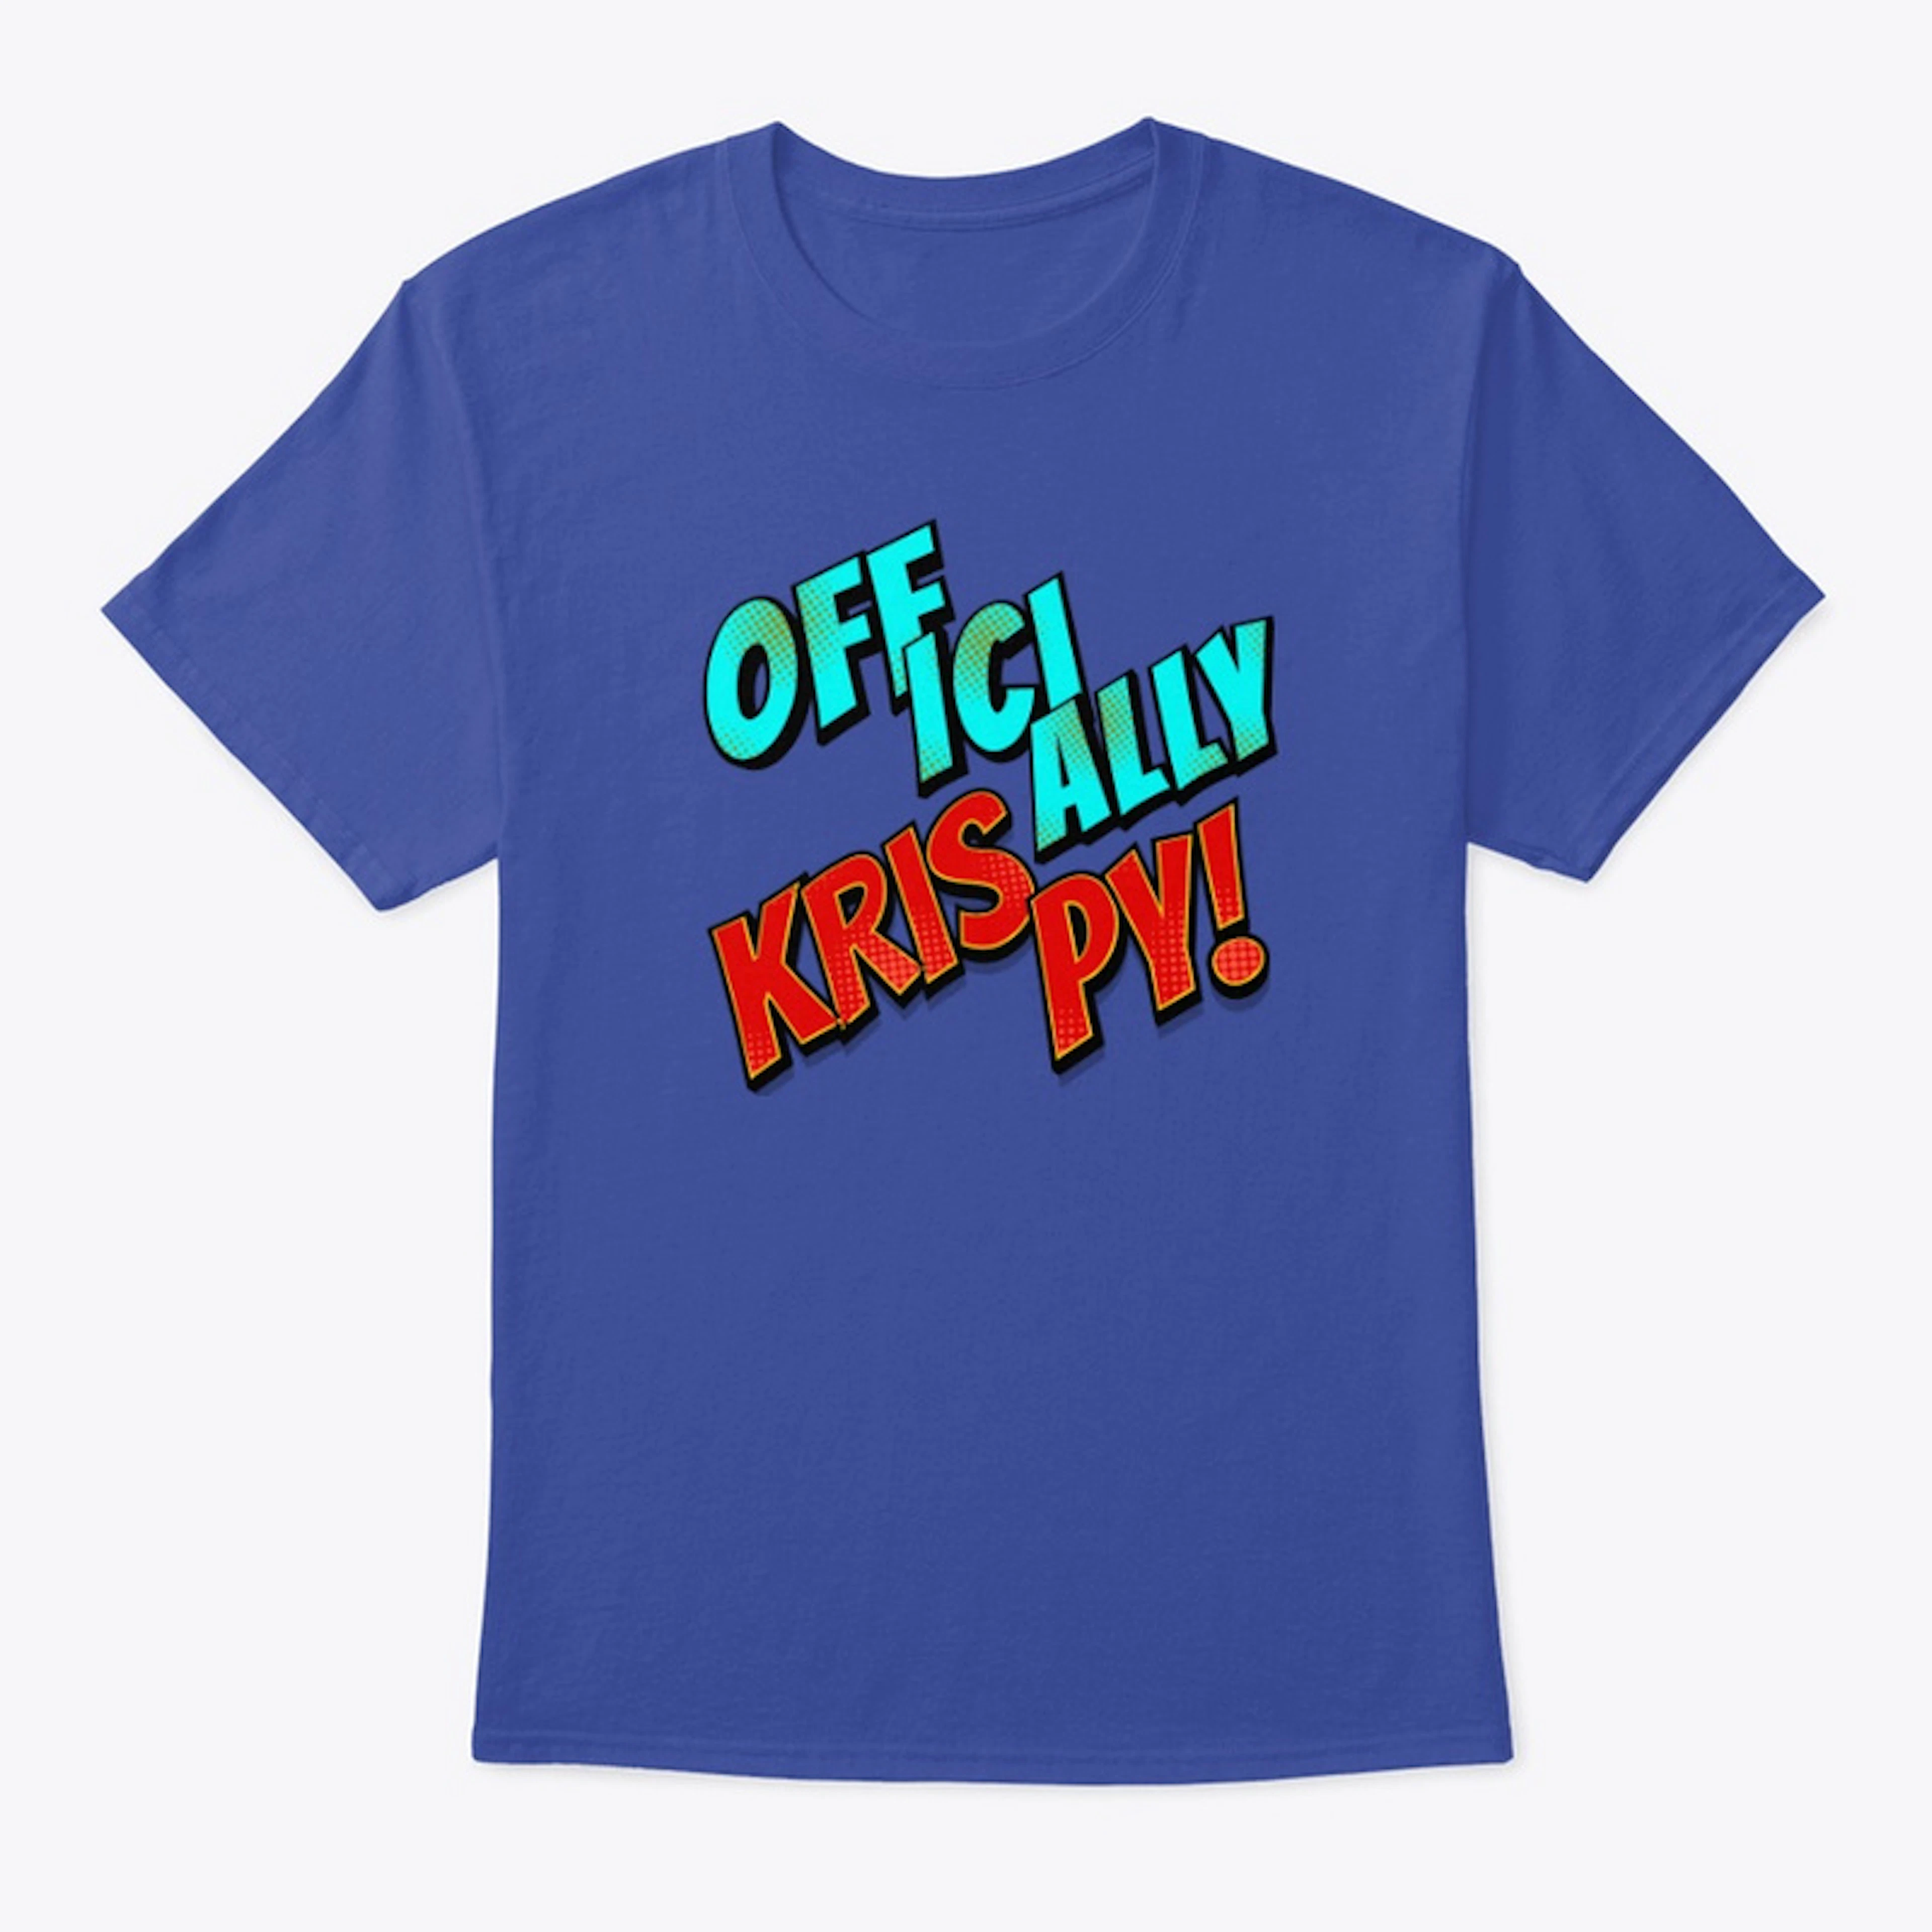 Officially Krispy